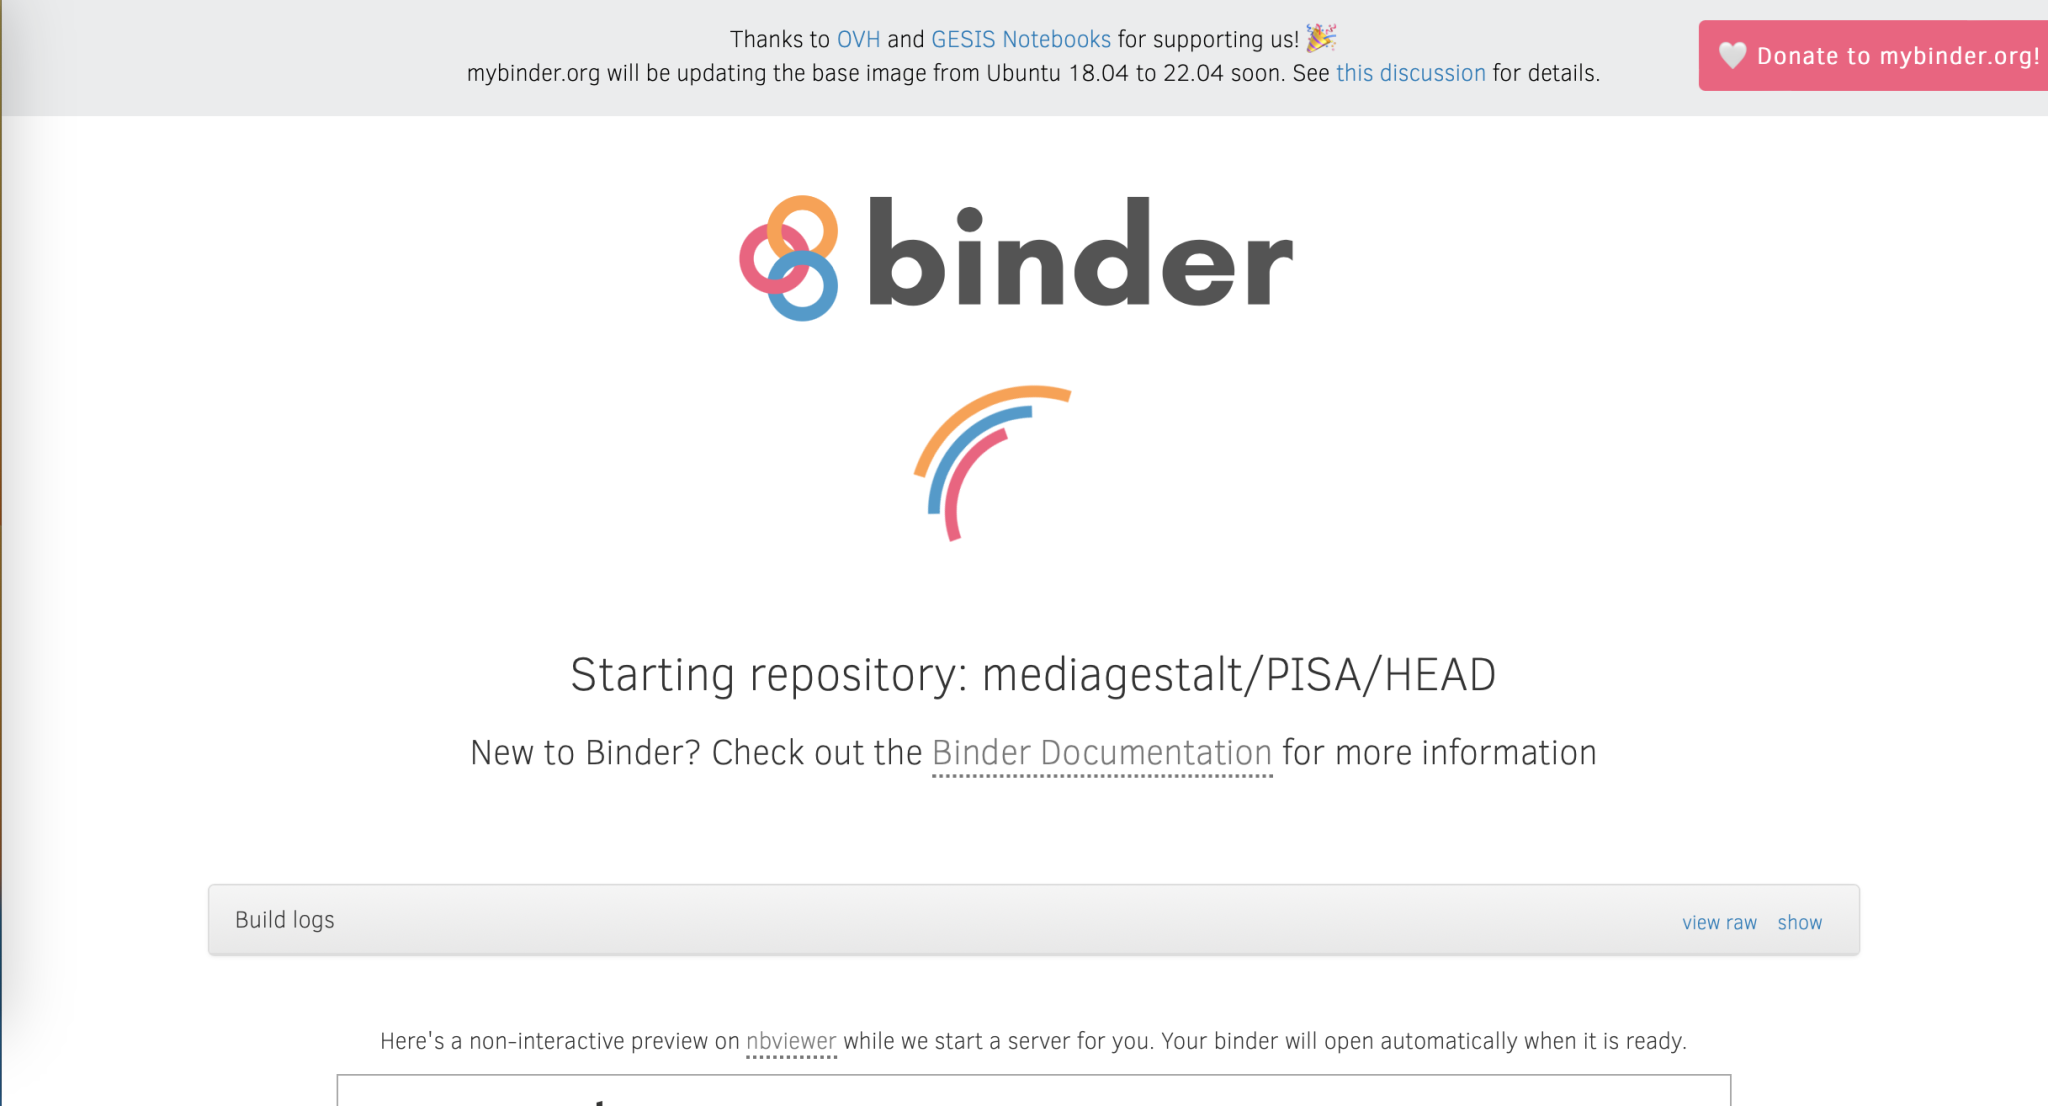 L'écran de chargement de Binder. On y retrouve le mot "Binder" en grand format. En dessous, on peut lire "Starting repository: mediagestalt/PISA/HEAD" et "New to Binder? Check out the "Binder Documentation for more information."